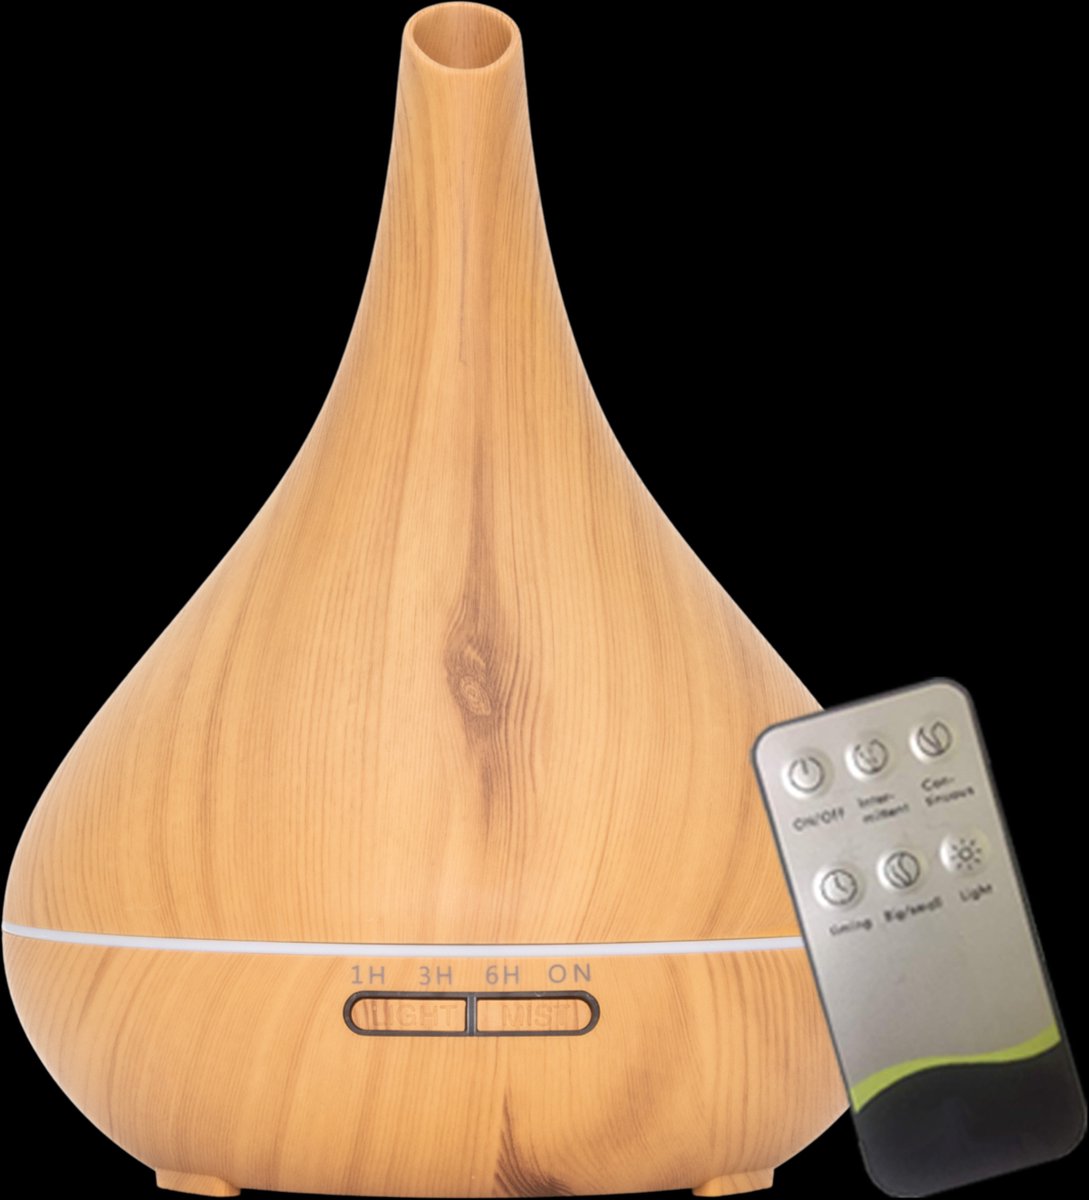 Lotus Pro - Light Wood - Aroma Diffuser Default Title